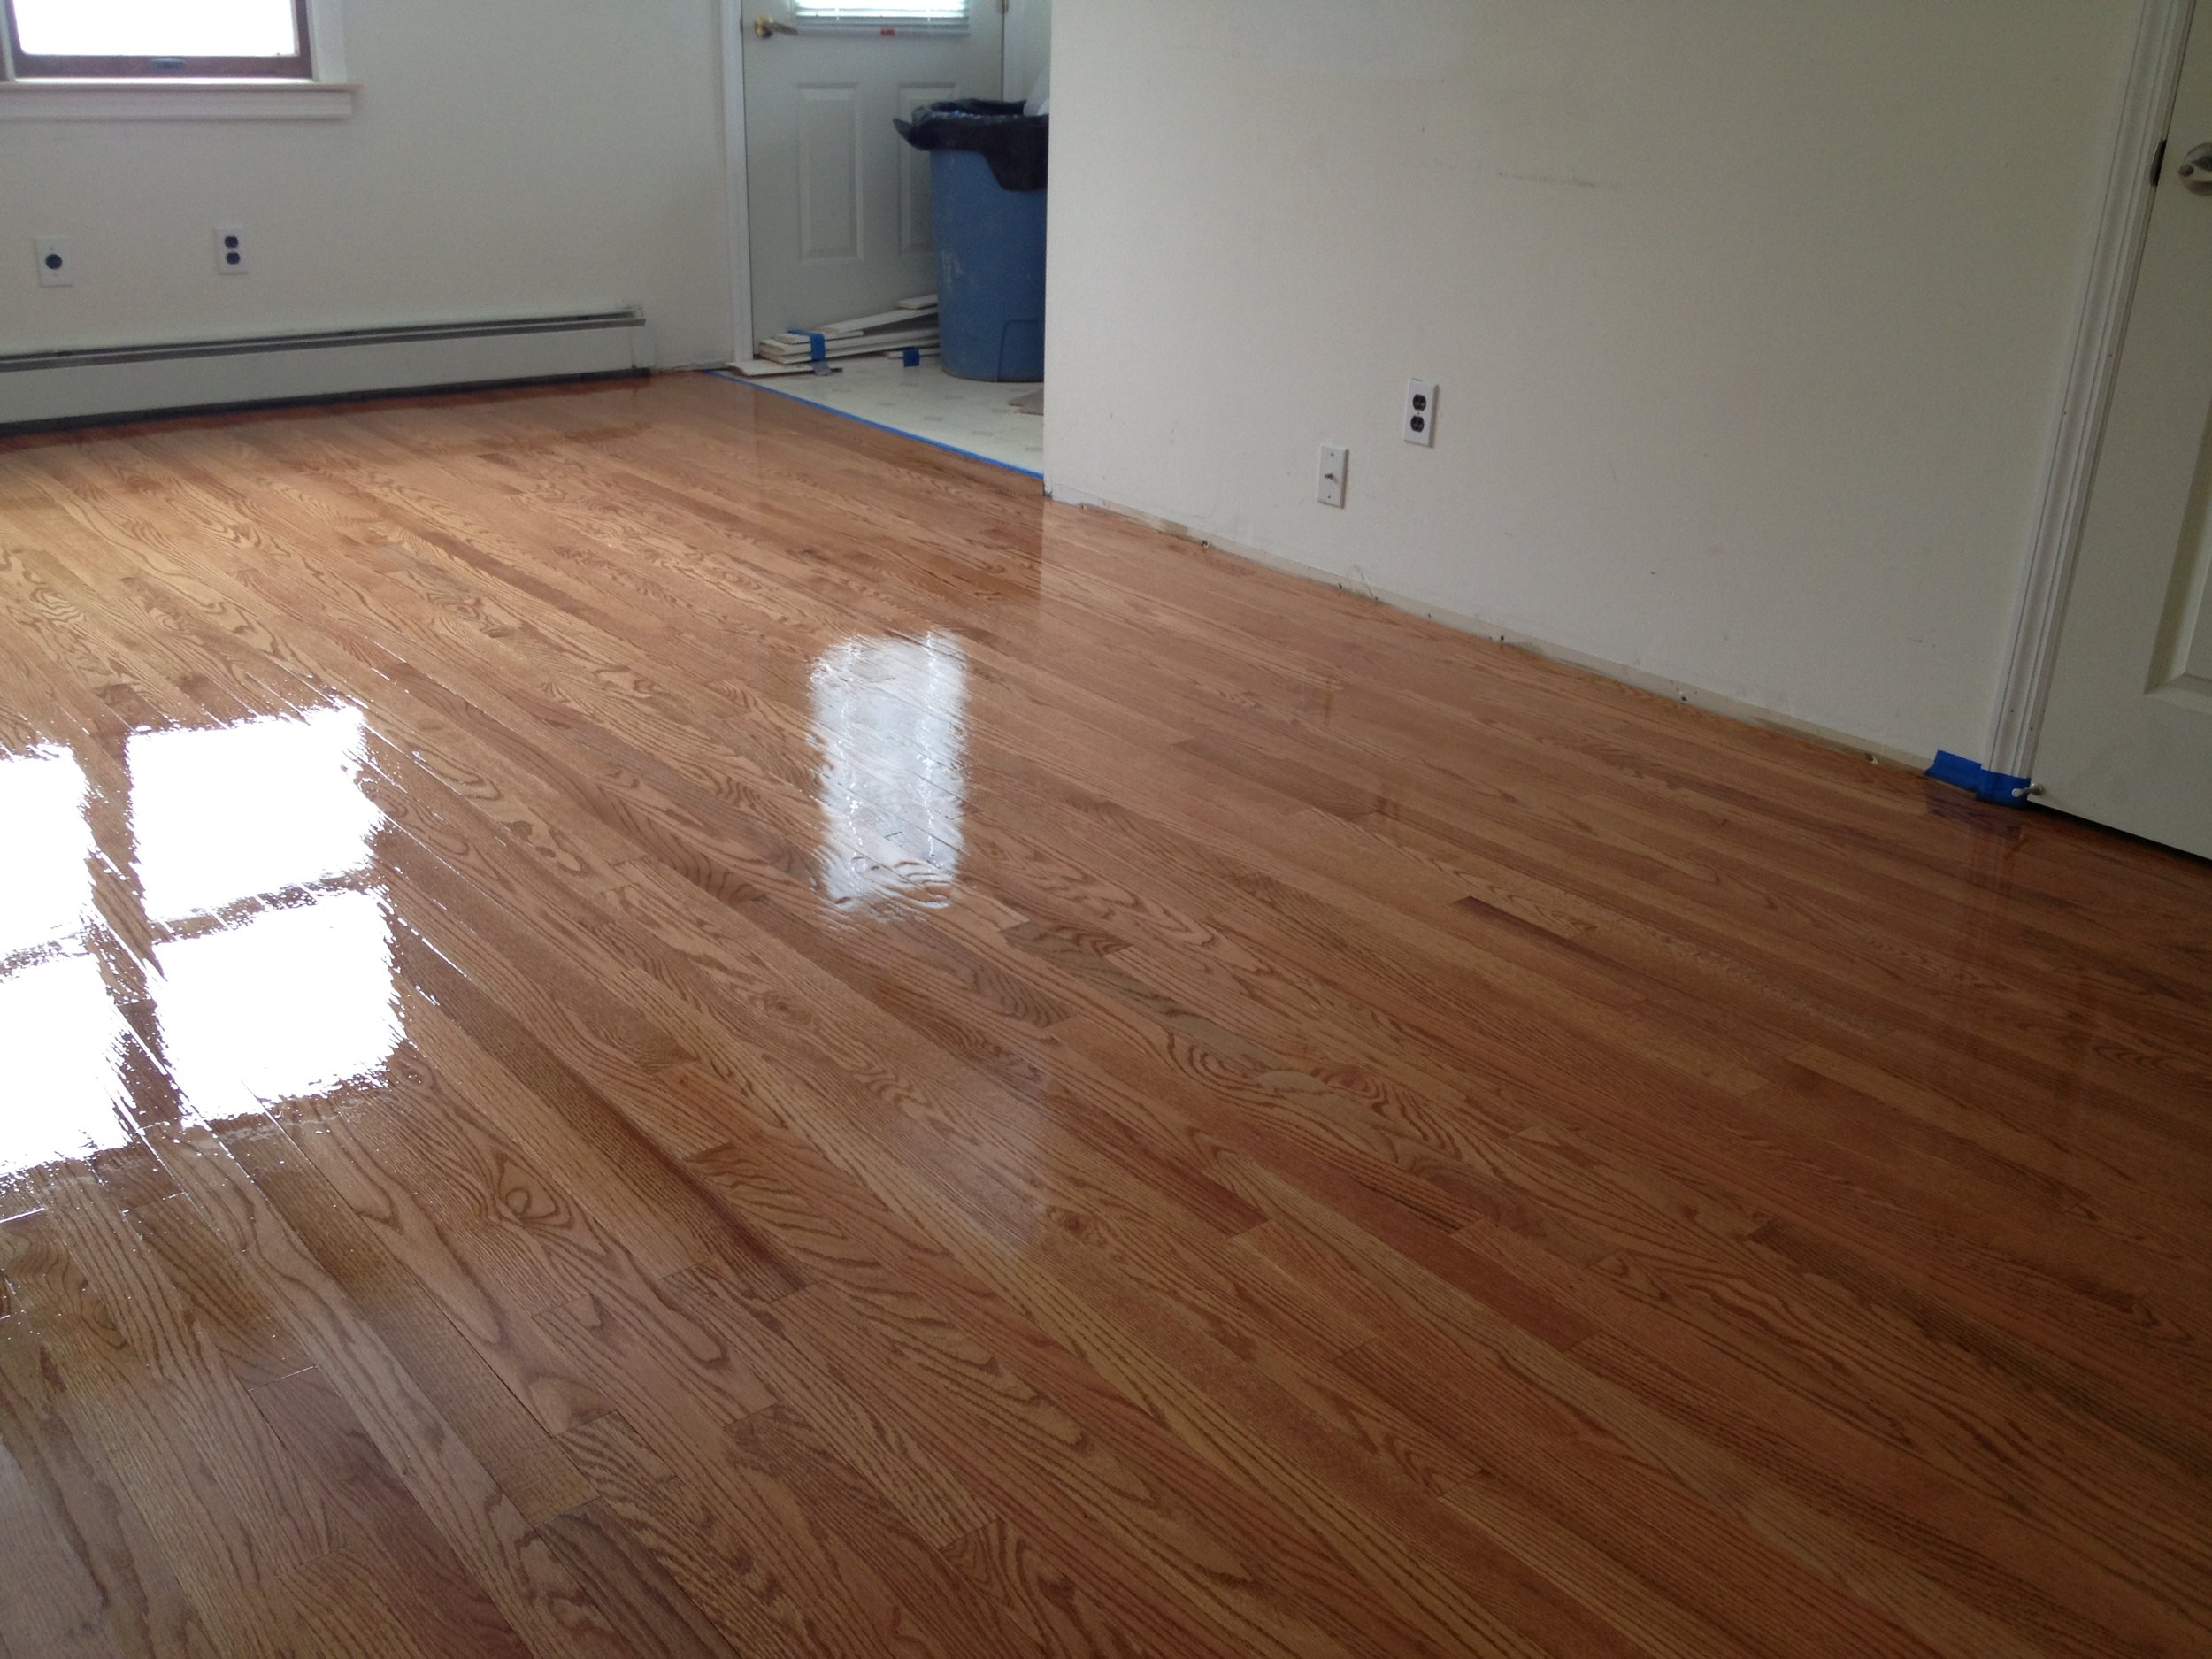 Diffe Grades Of Hardwood Flooring, 1 1 2 Inch Red Oak Hardwood Flooring